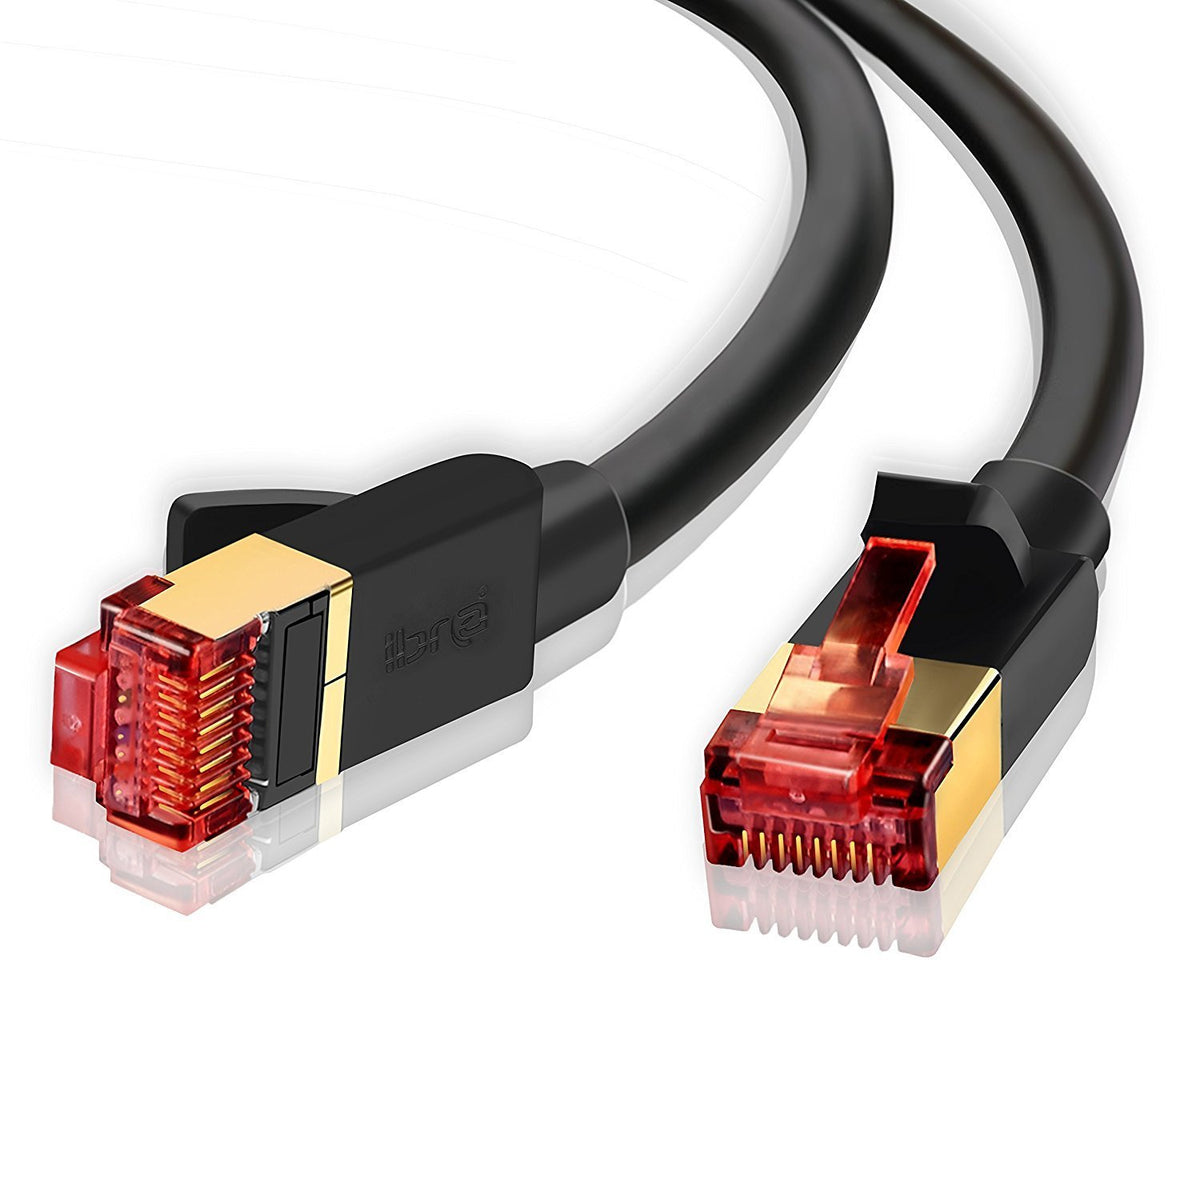 Ethernet Gigabit Lan Network Cable (RJ45) Advanced CAT 7 |Gold Connectors| 10Gbps 600MHz |10/100/1000Mbit/s | Patch cable |STP| compatible with CAT.5 / CAT.5e / CAT.6 | Switch/Router/Modem/Patch panel / Access Point / patch fields | 20M IBRA Round Black